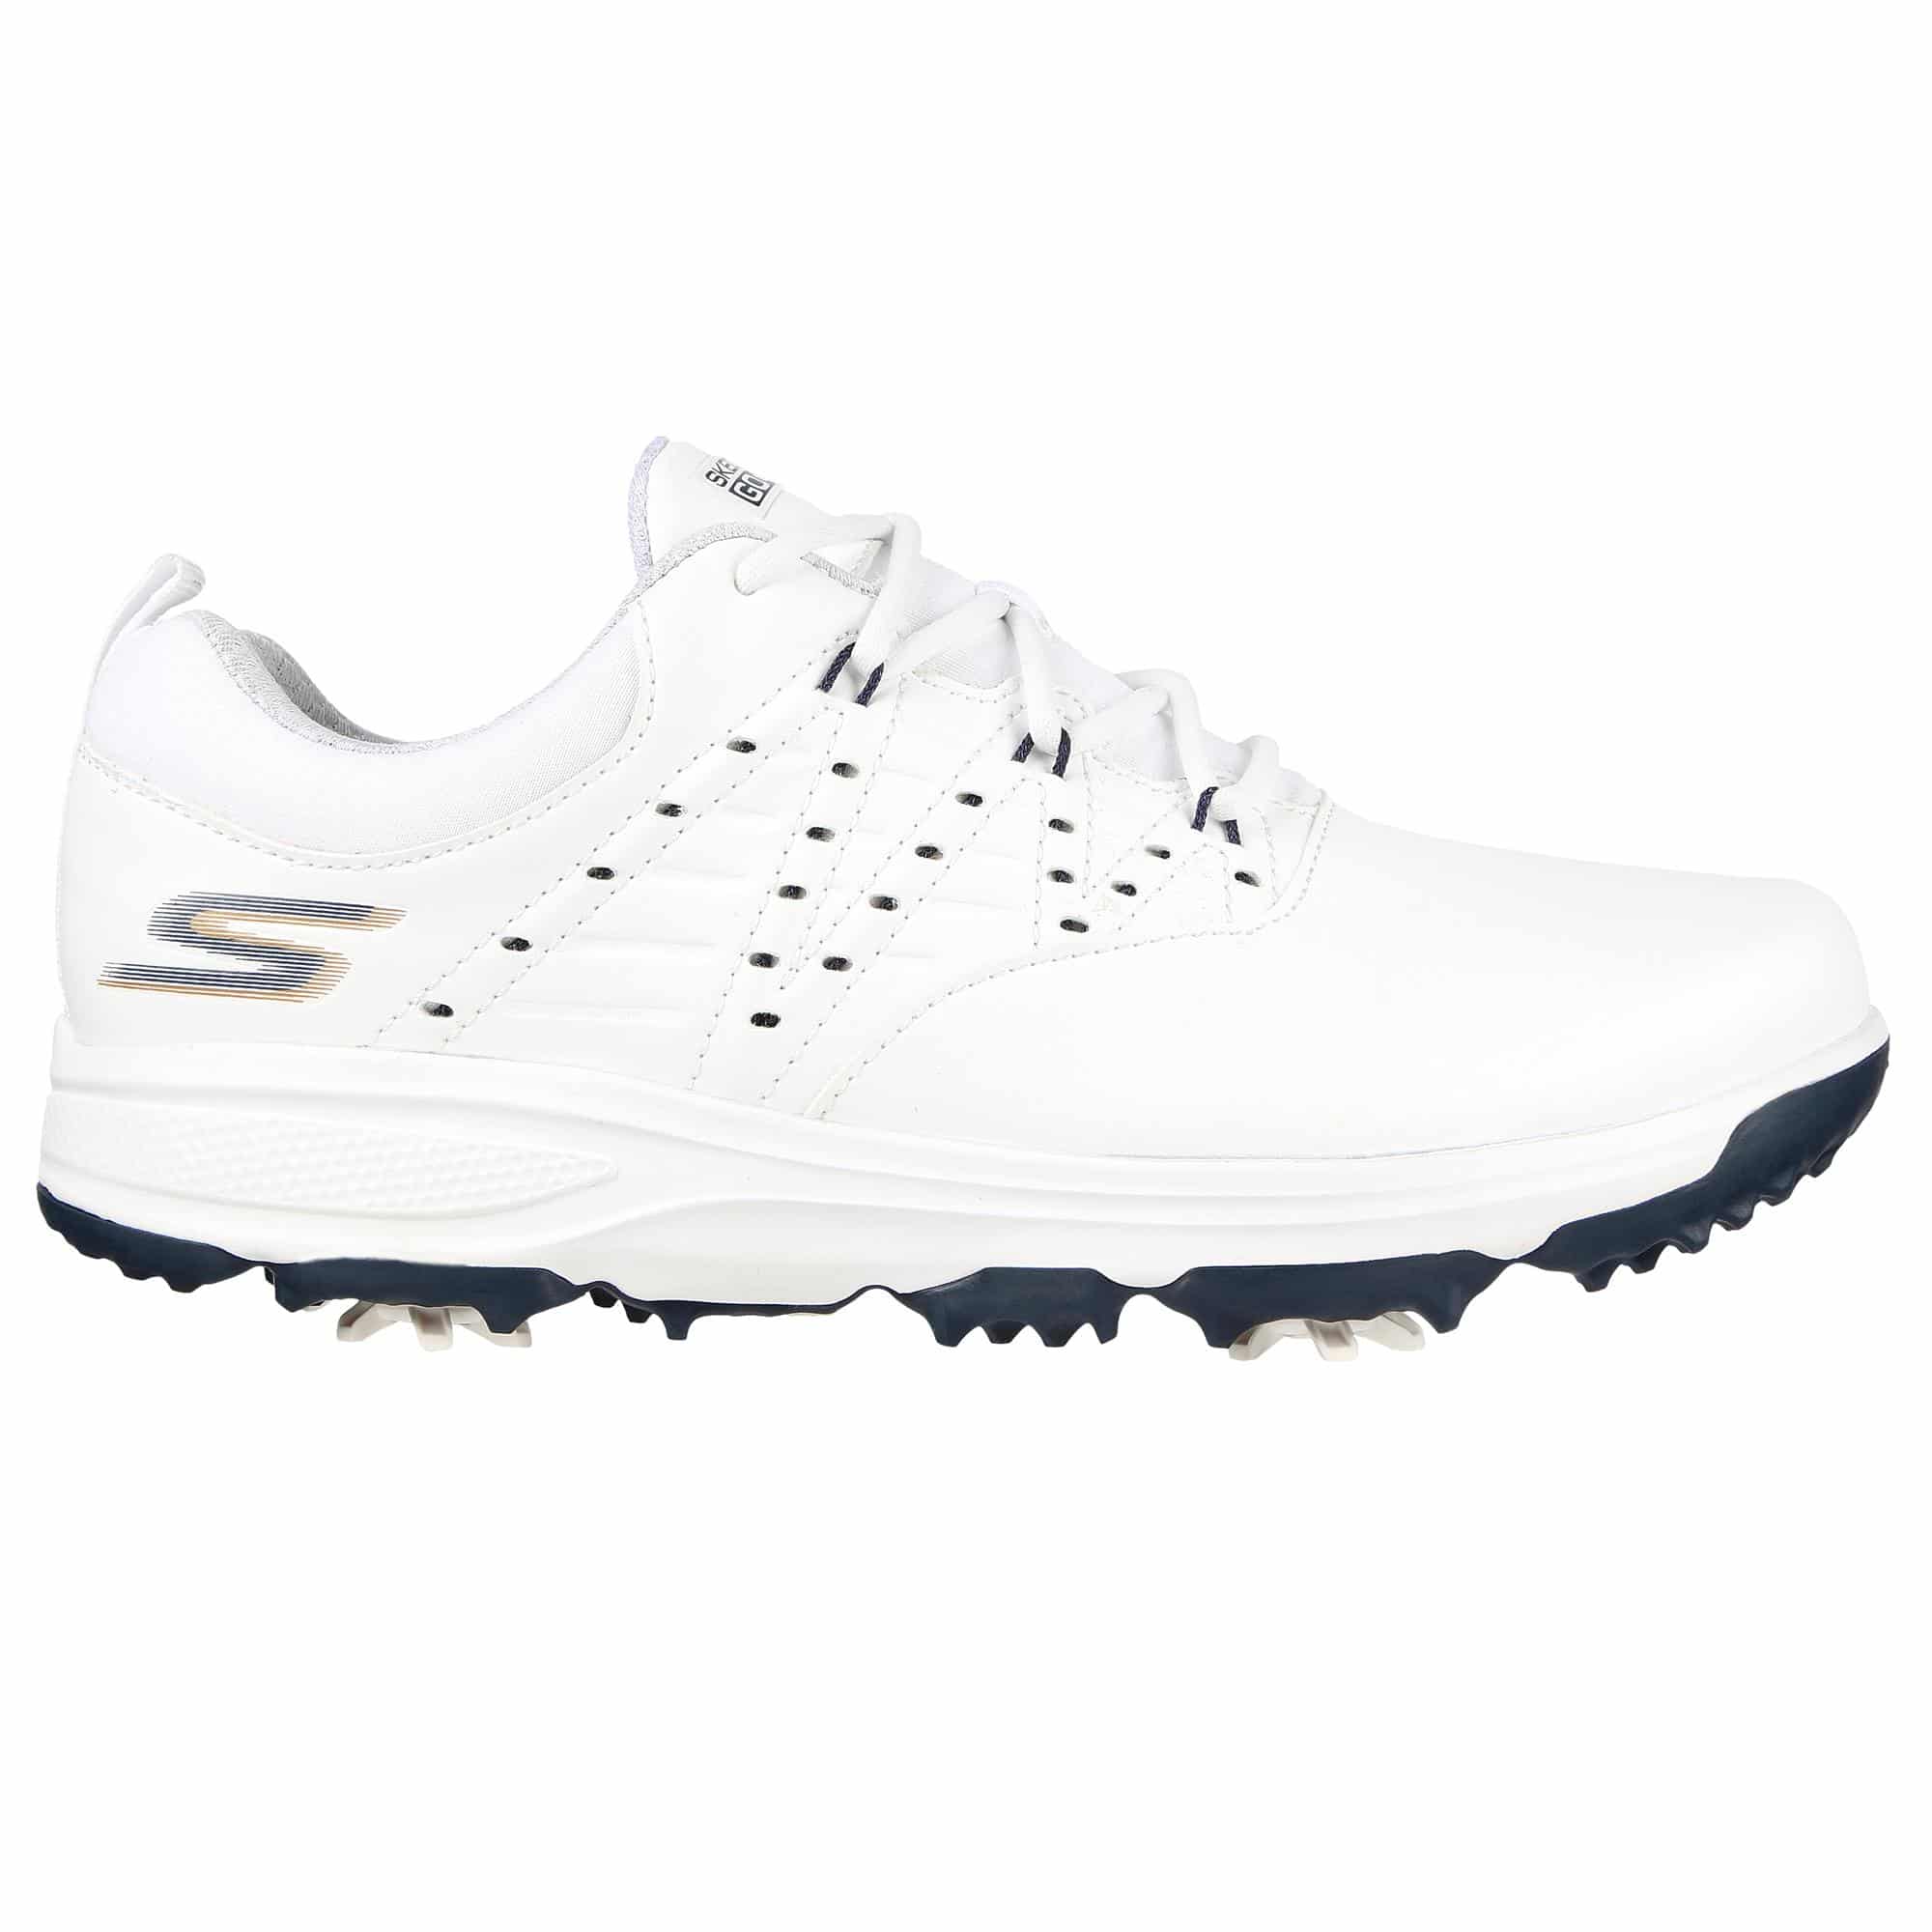 Skechers Go Golf Pro 2 Ladies Golf Shoes White/Navy